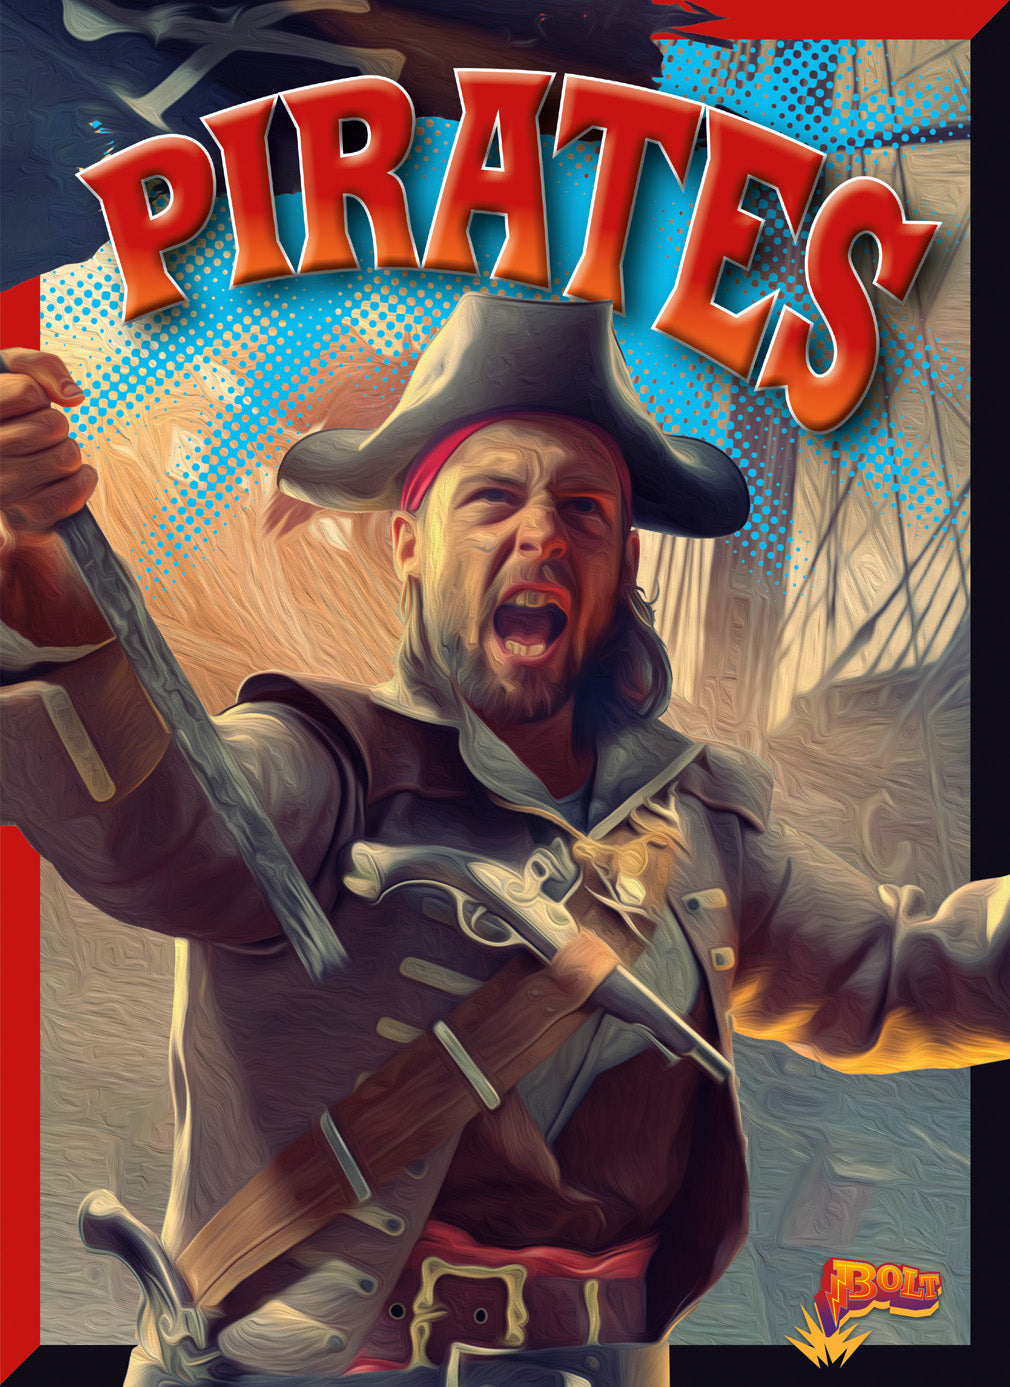 History's Warriors: Pirates